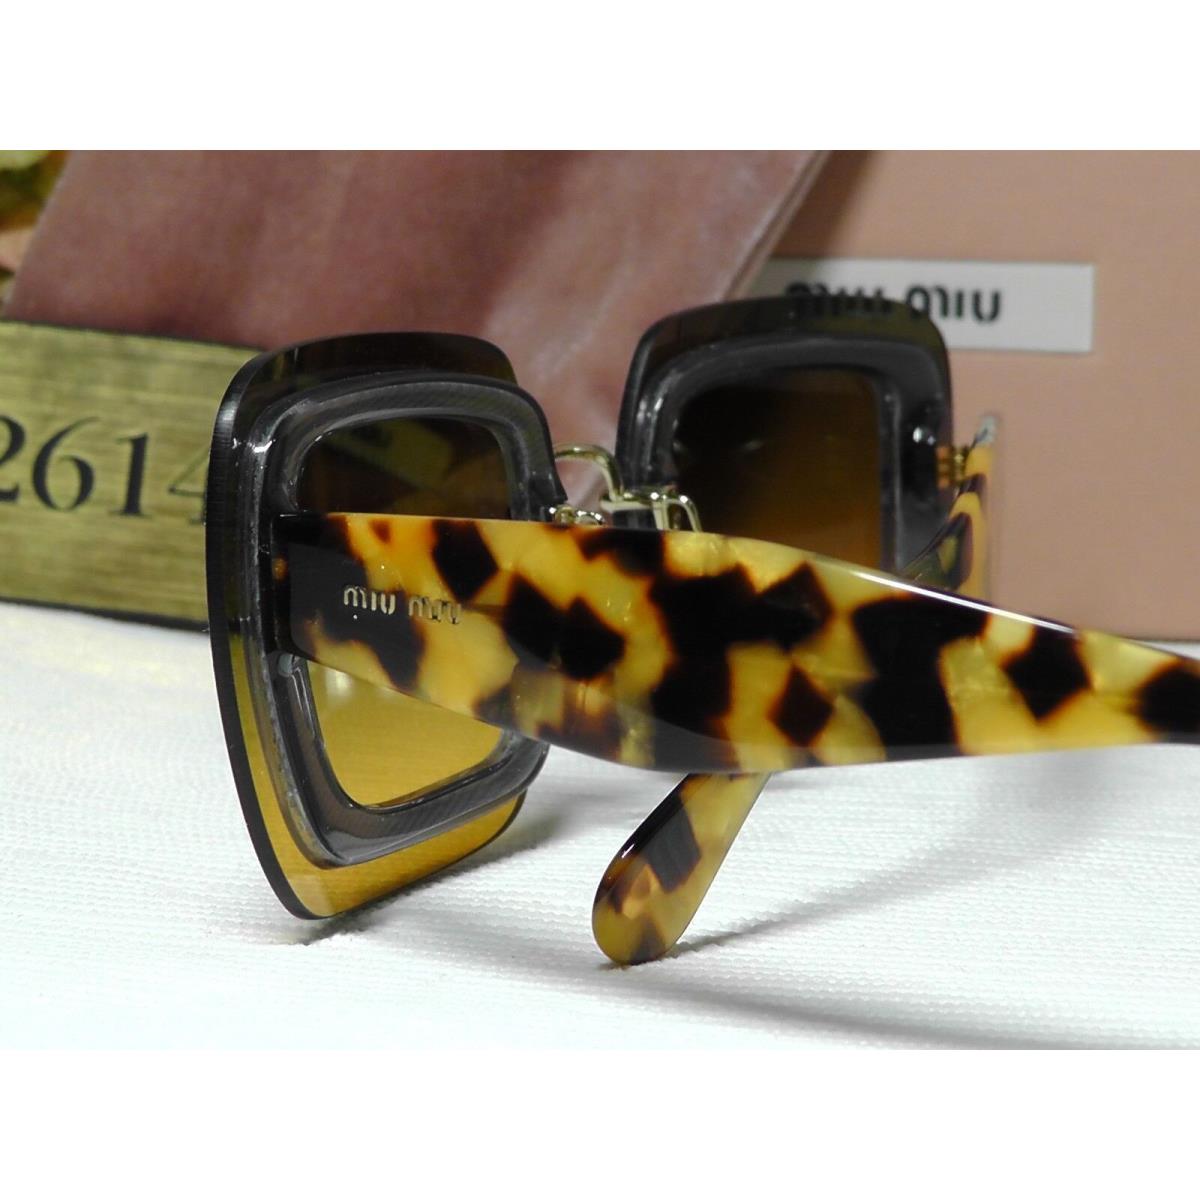 Miu Miu sunglasses  - Light Havana Frame, Gray / Yellow Lens 8